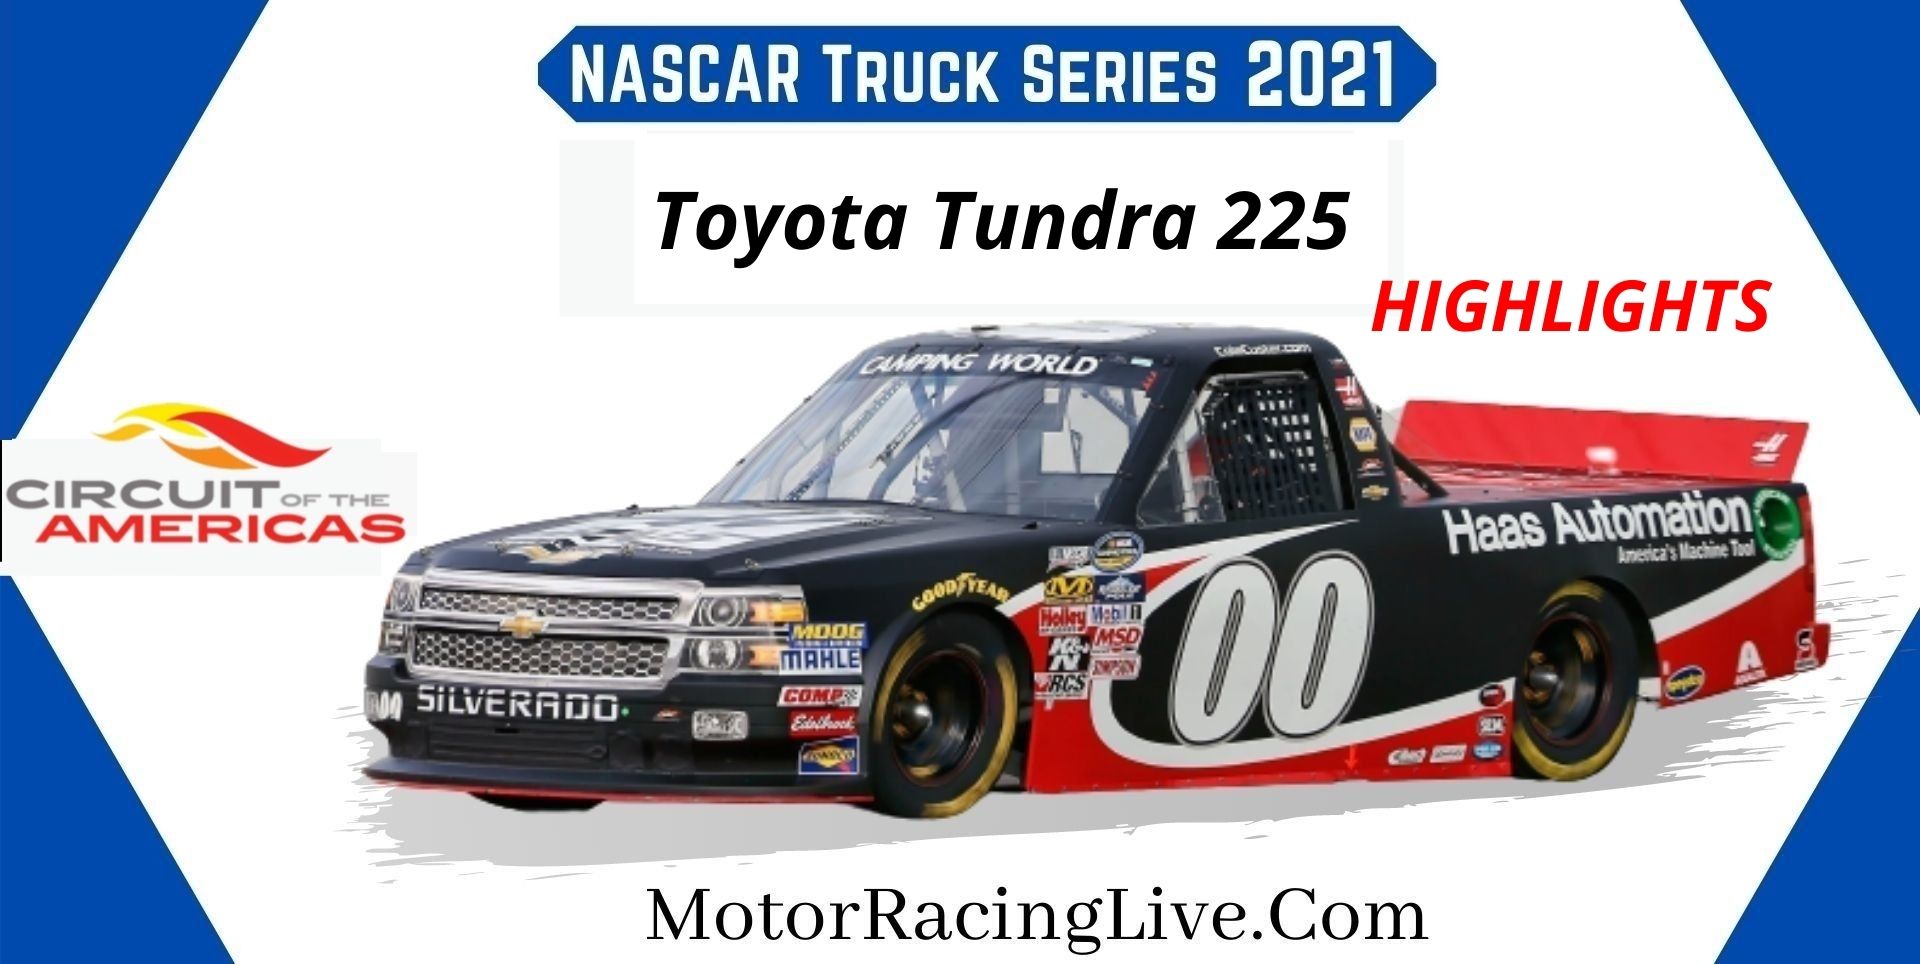 Toyota Tundra 225 Highlights 2021 NASCAR Truck Series